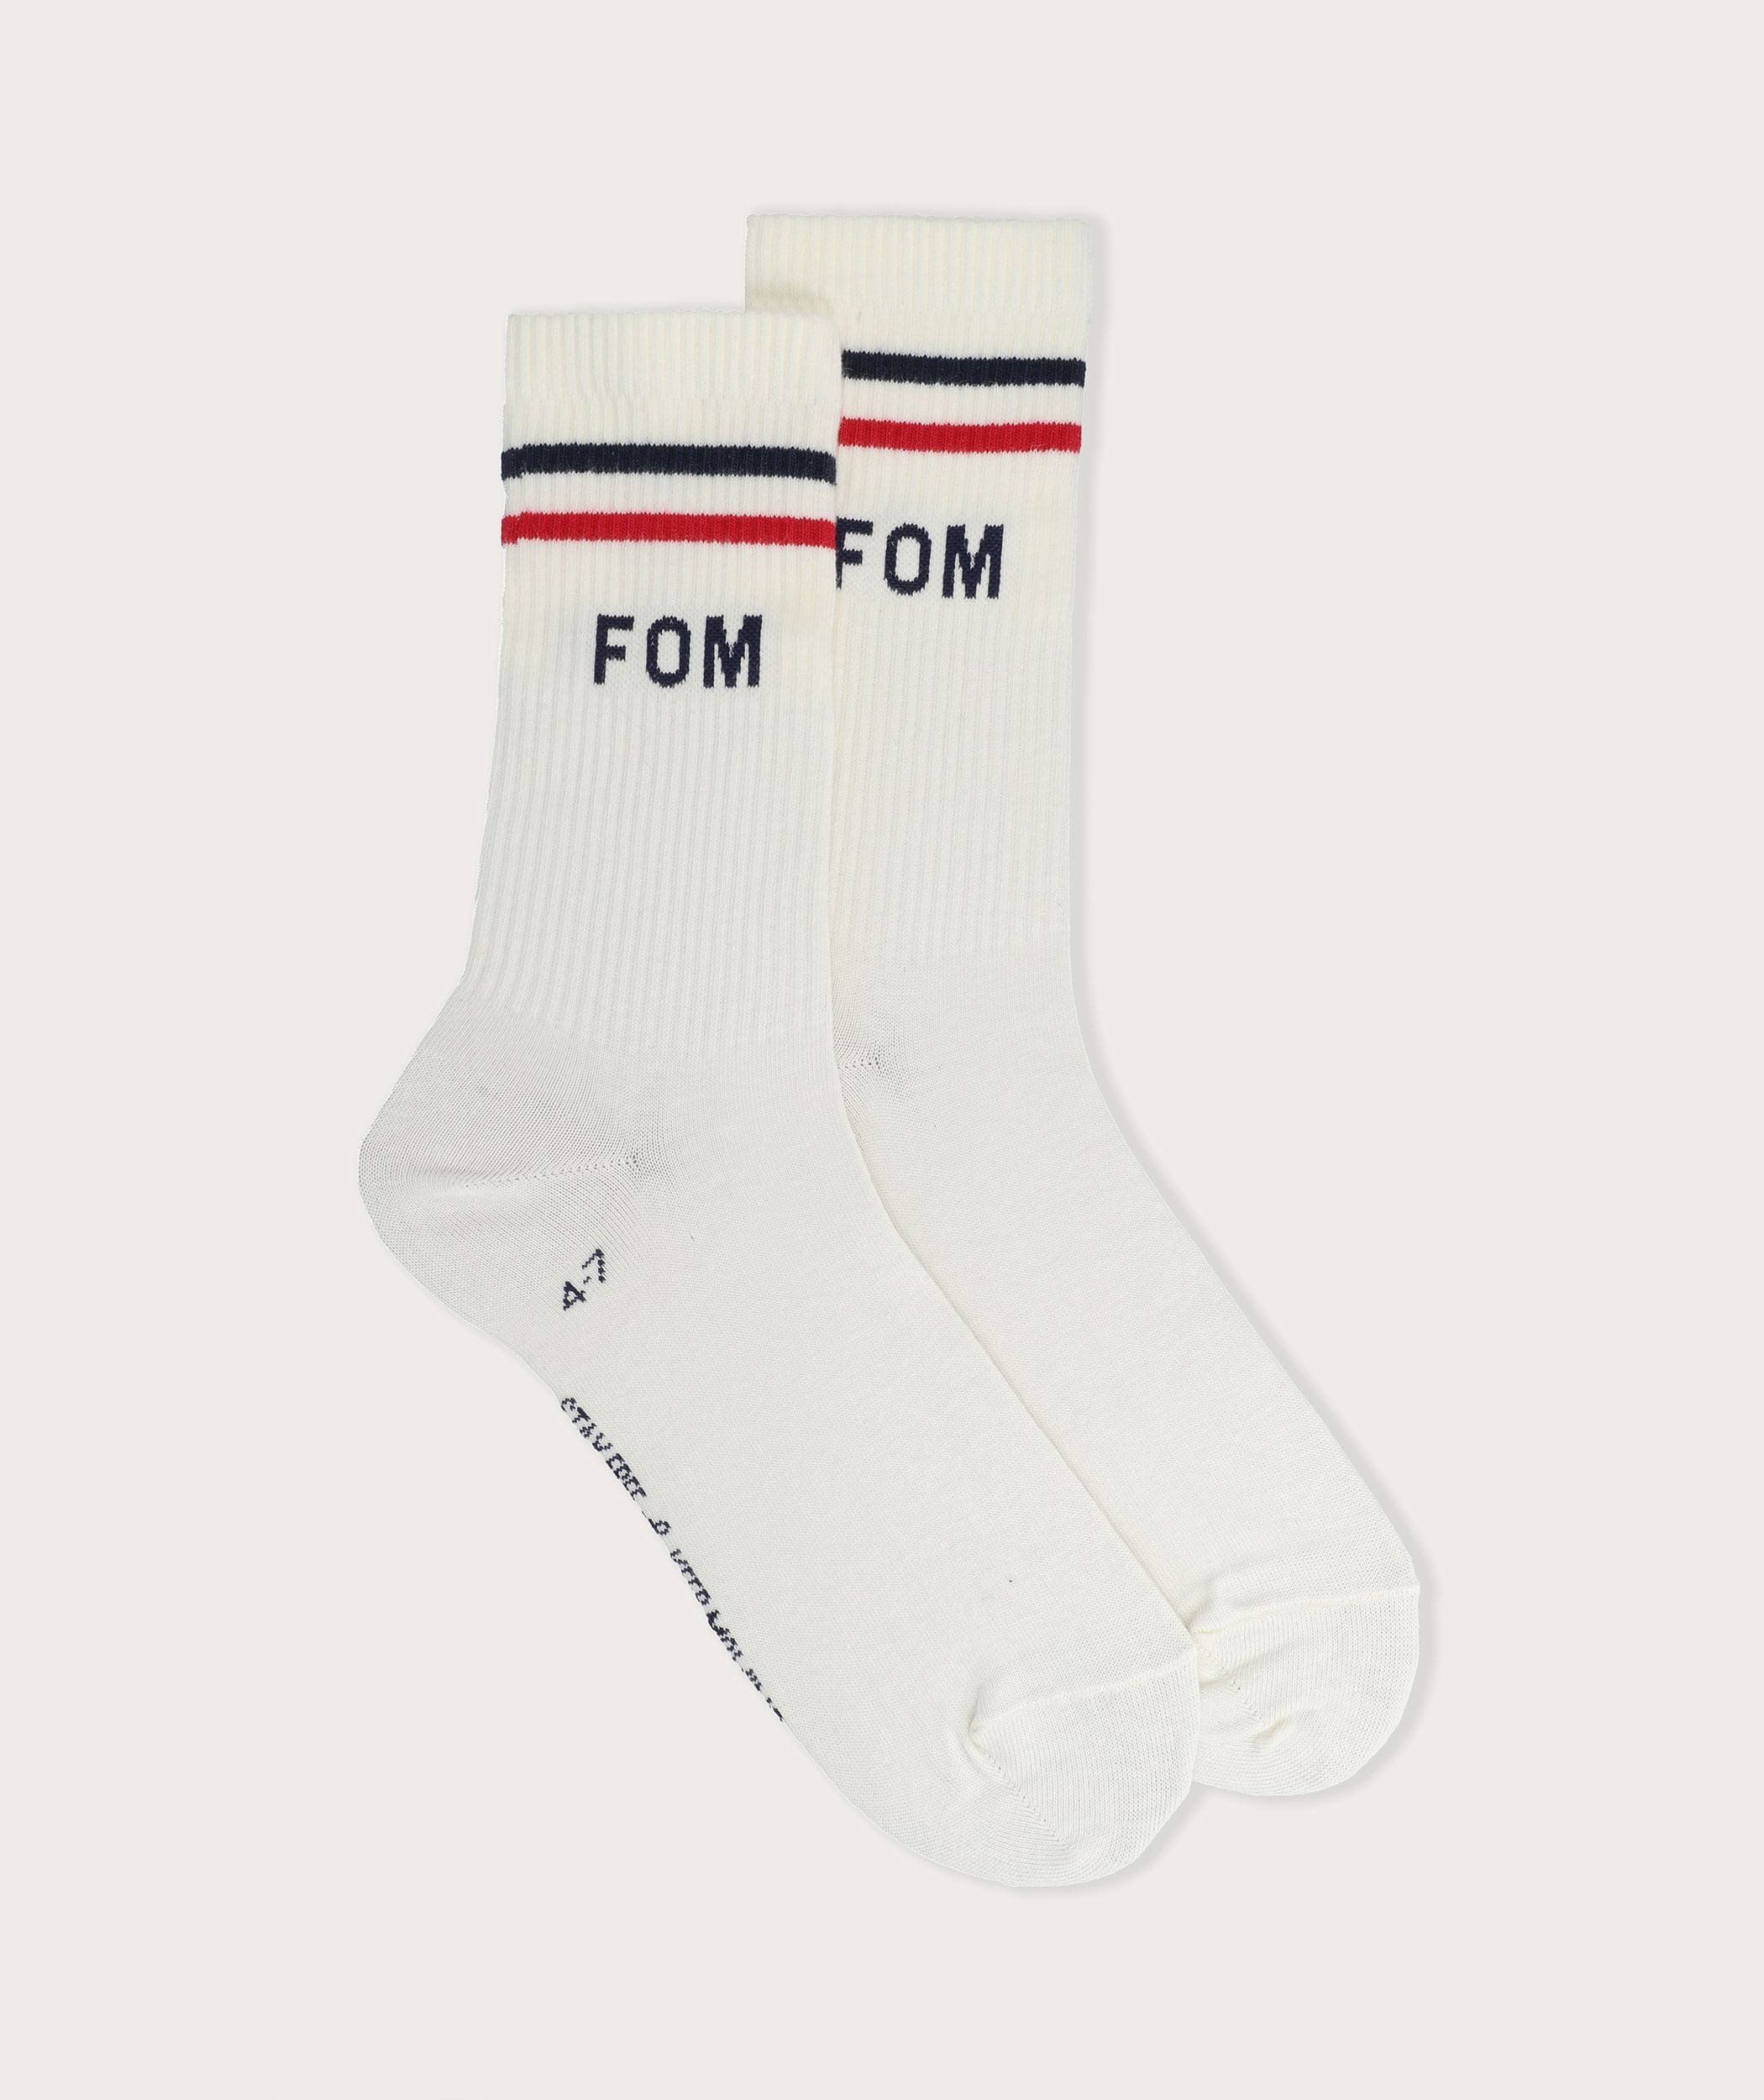 Socks FOM Crew - Beige/ Navy & Red (Size 7-11)